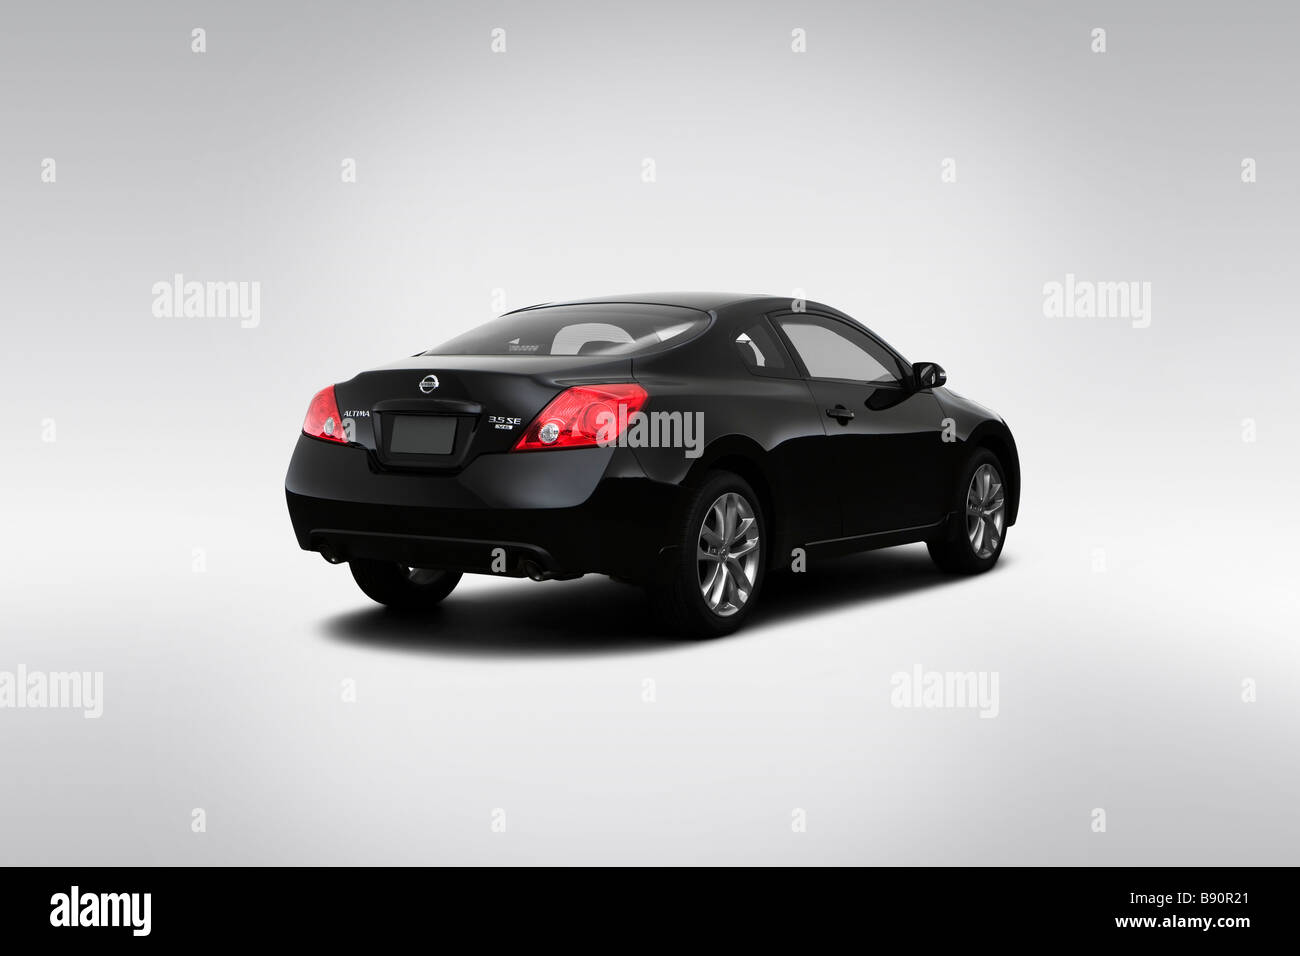 2009 Nissan Altima 3.5 SE in Black - Rear angle view Stock Photo